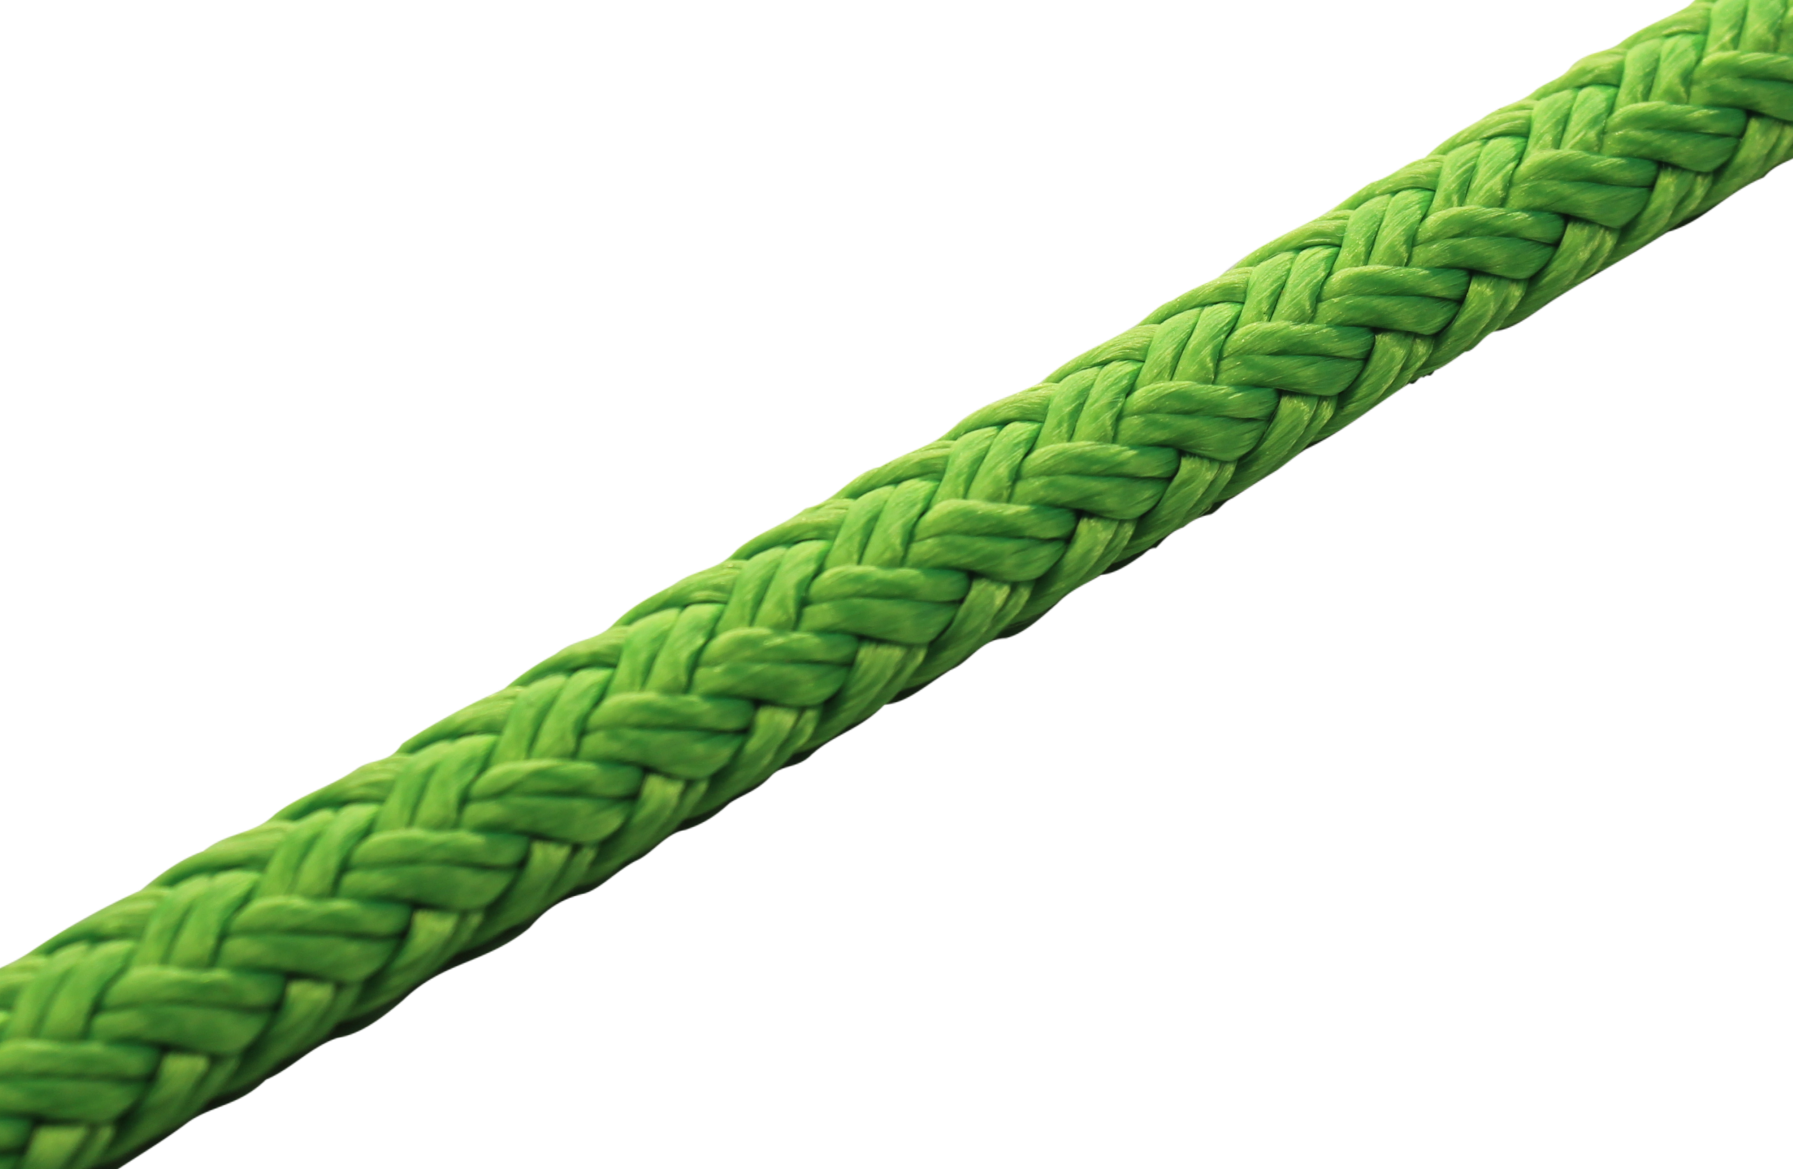 1/2 Optimus 12 strand Neon Green - by the foot - The Rope Guru LLC